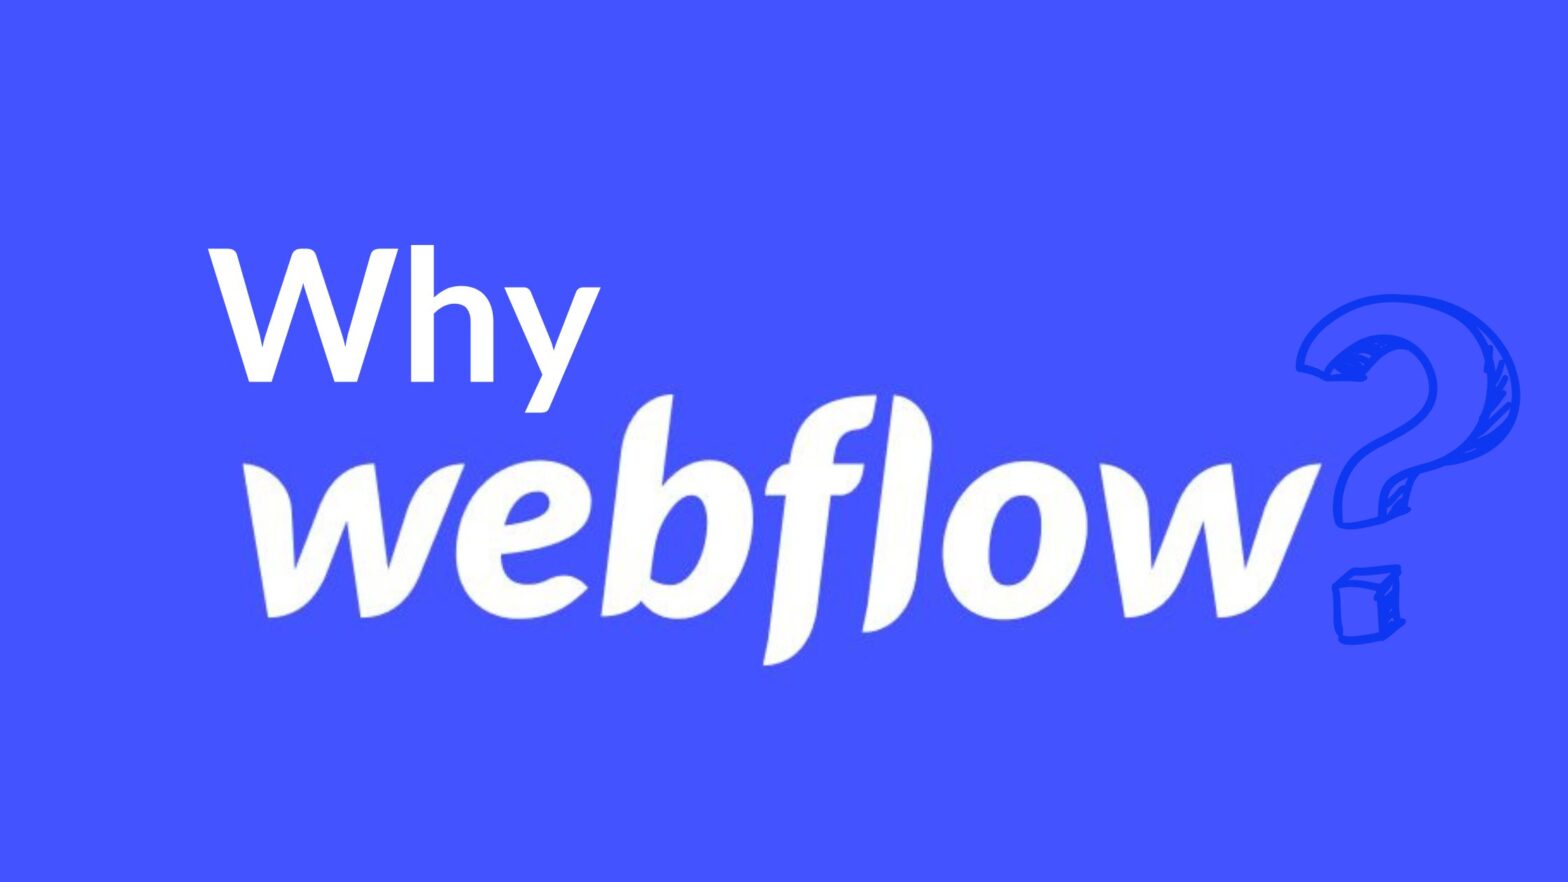 Why Webflow?